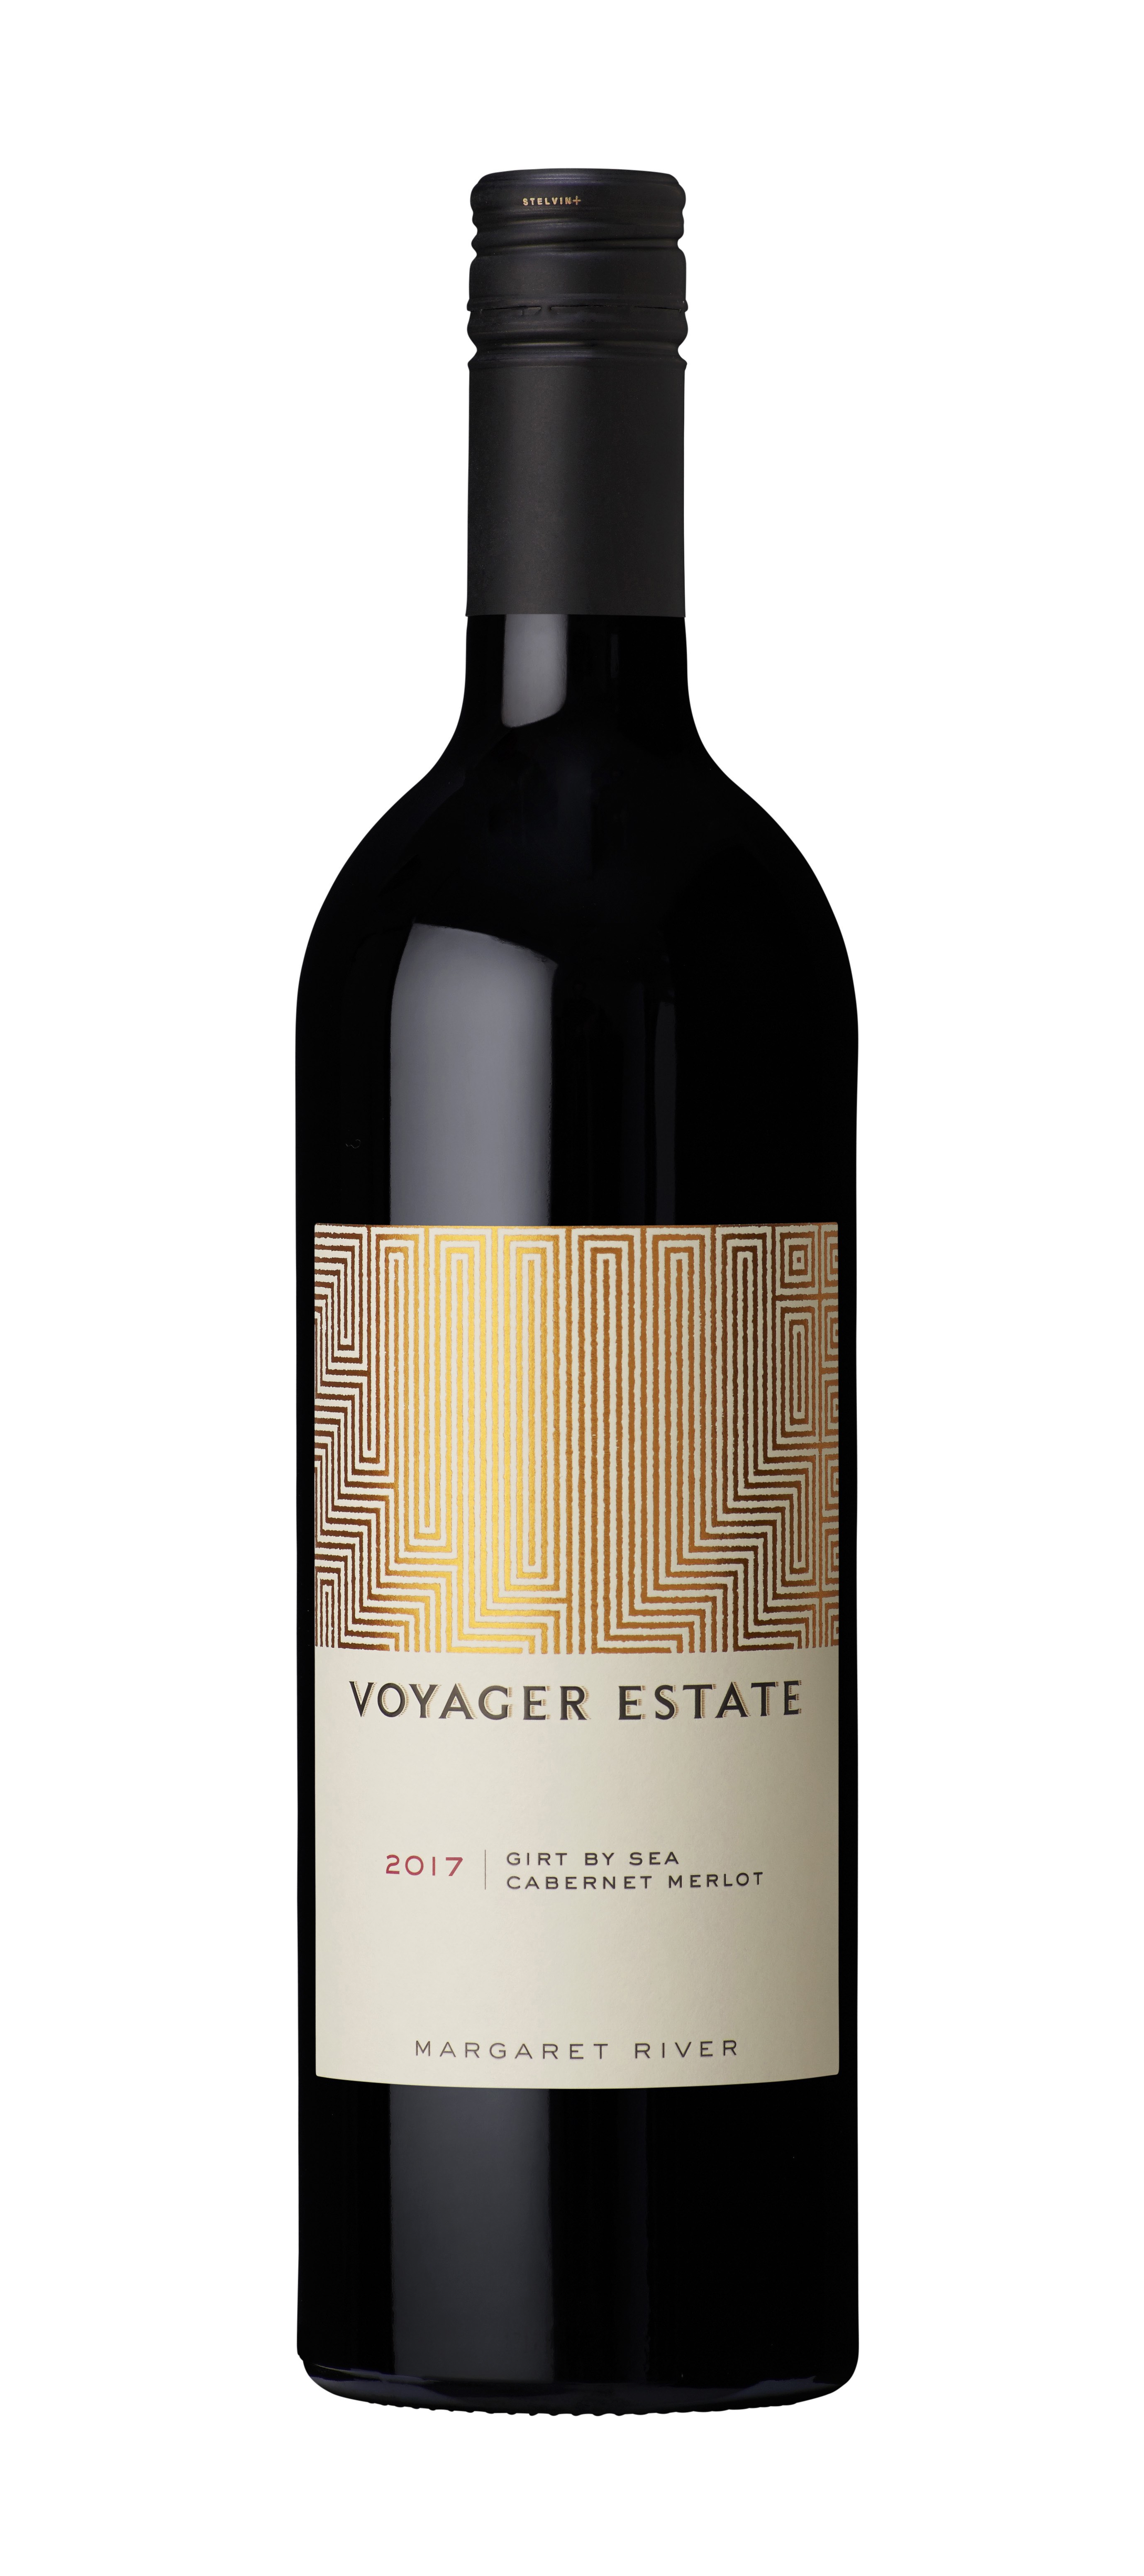 - 2020 Wine Voyager Cabernet Goblet by Girt Estate Sea Merlot